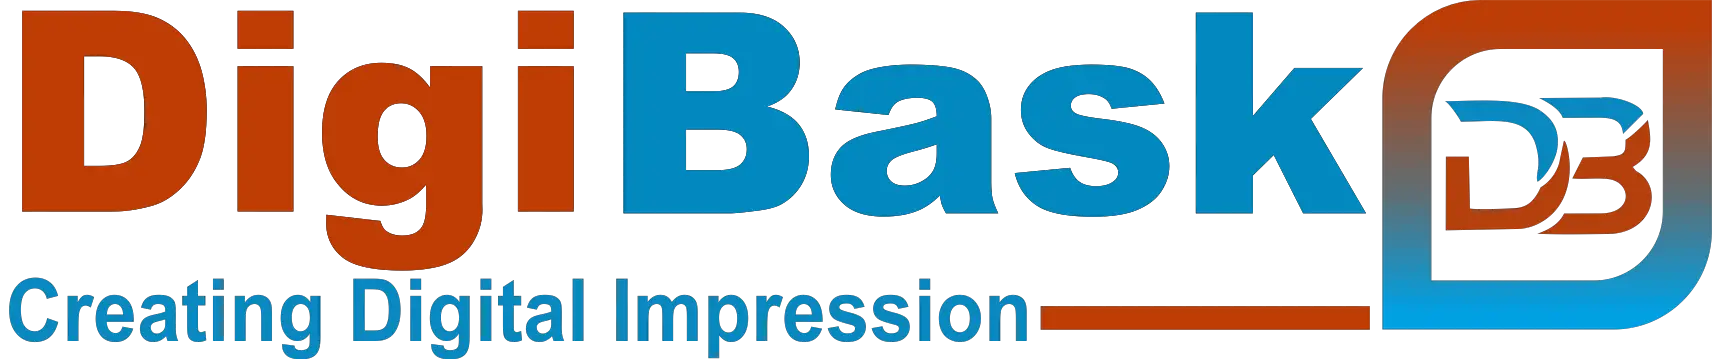 Company logo of DigiBask Training